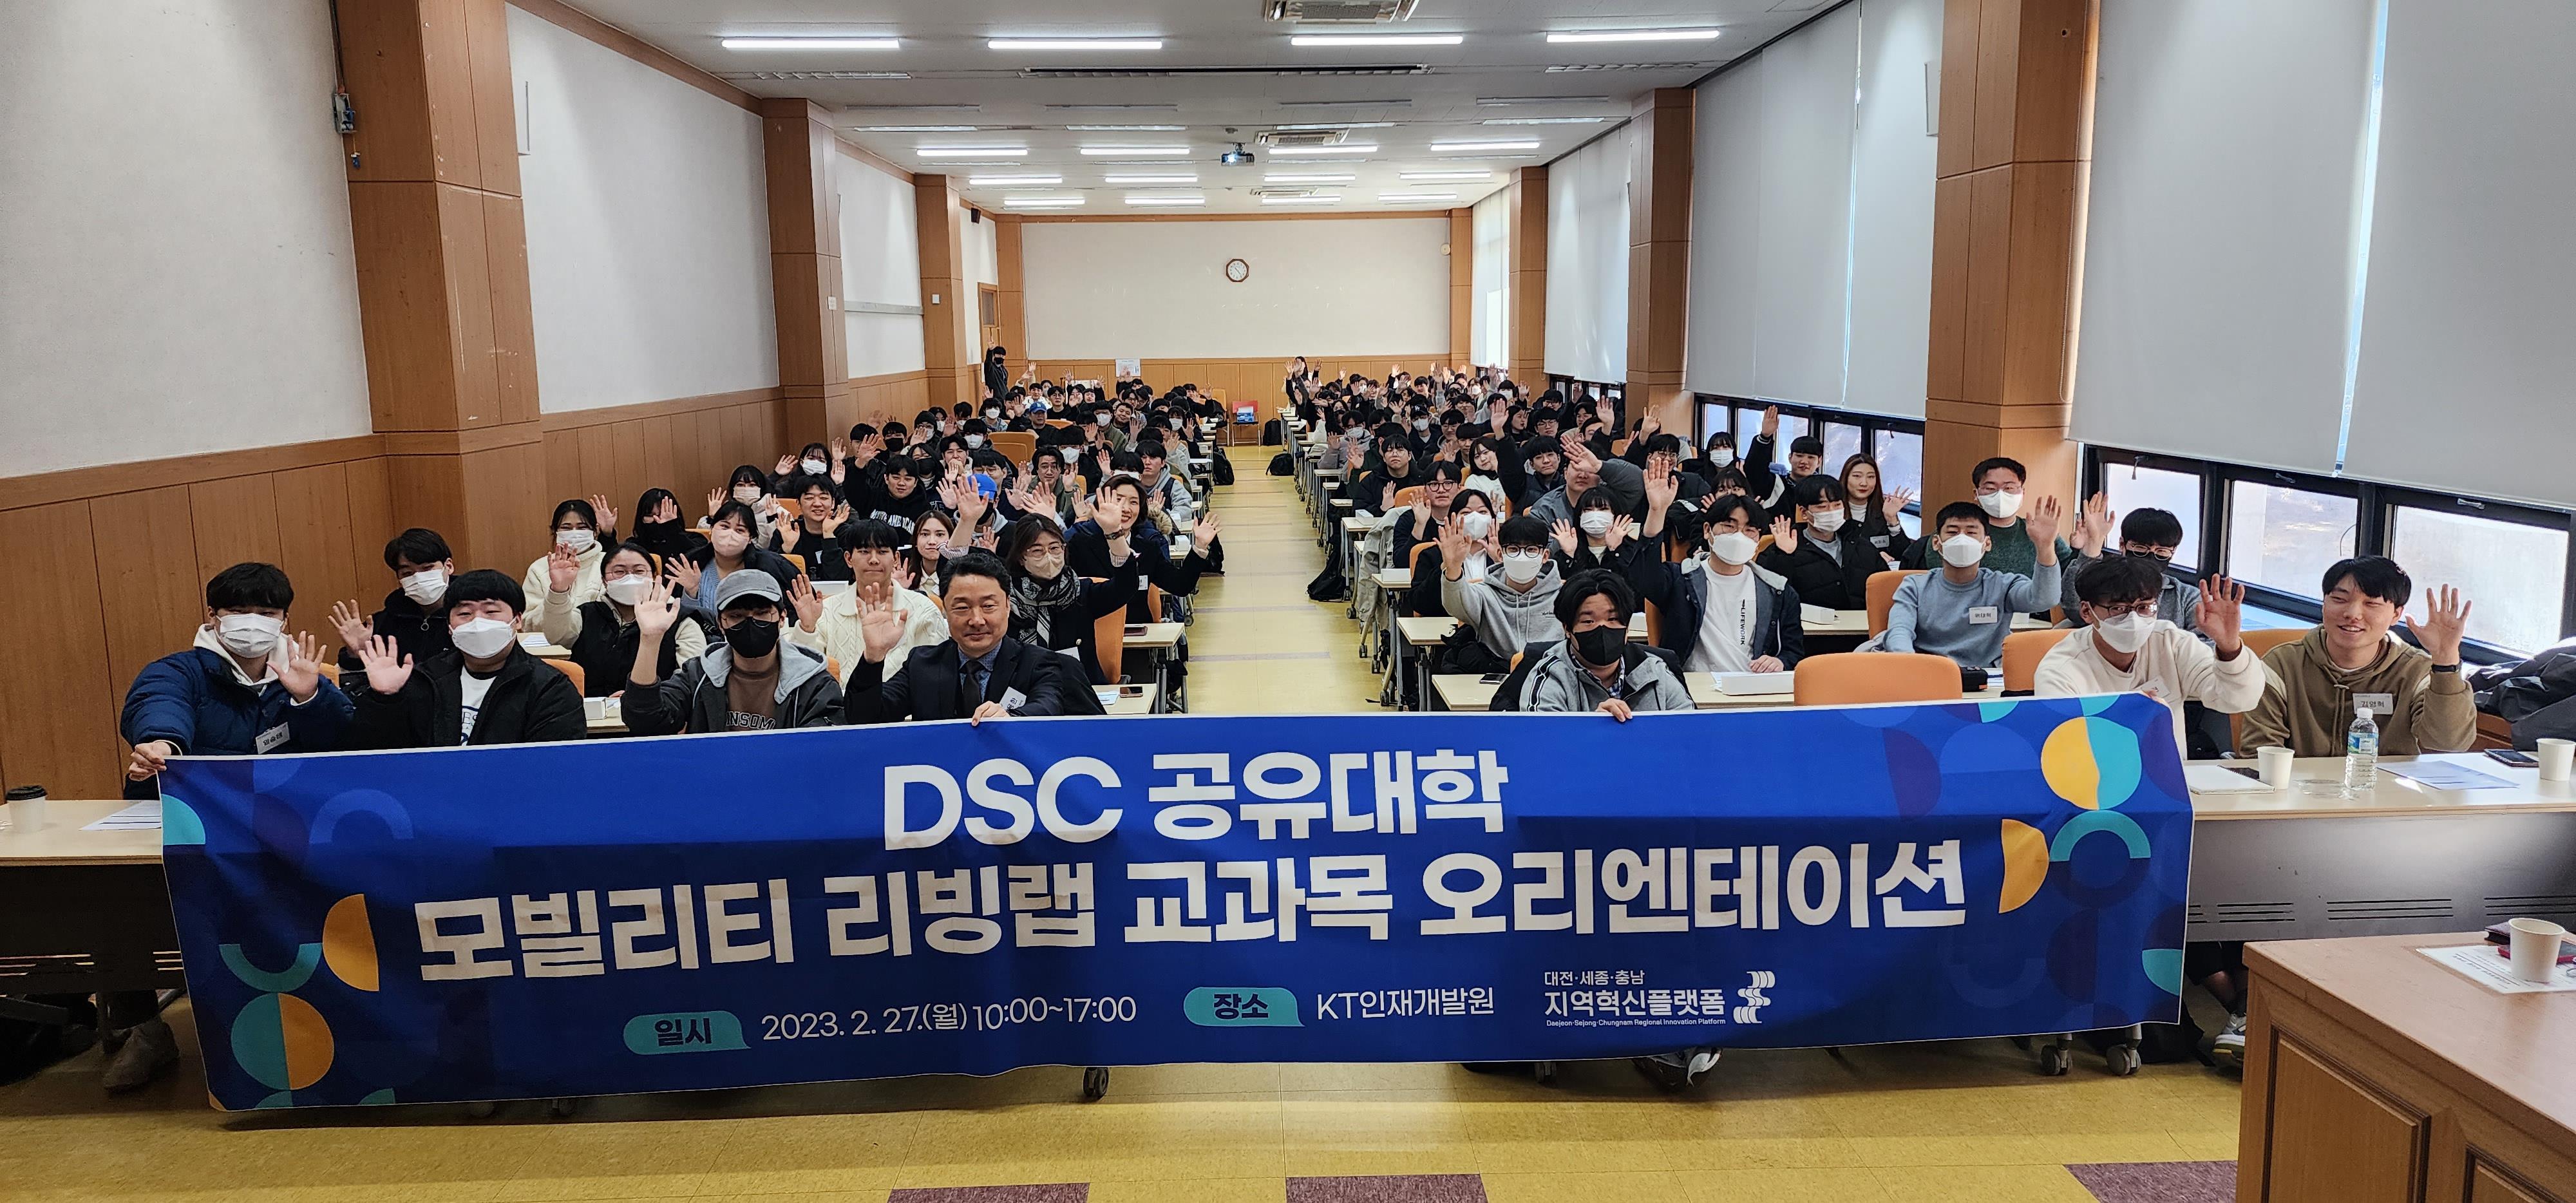 DSC 공유대학, 모빌리티 리빙랩 교과목 오리엔테이션 개최 사진